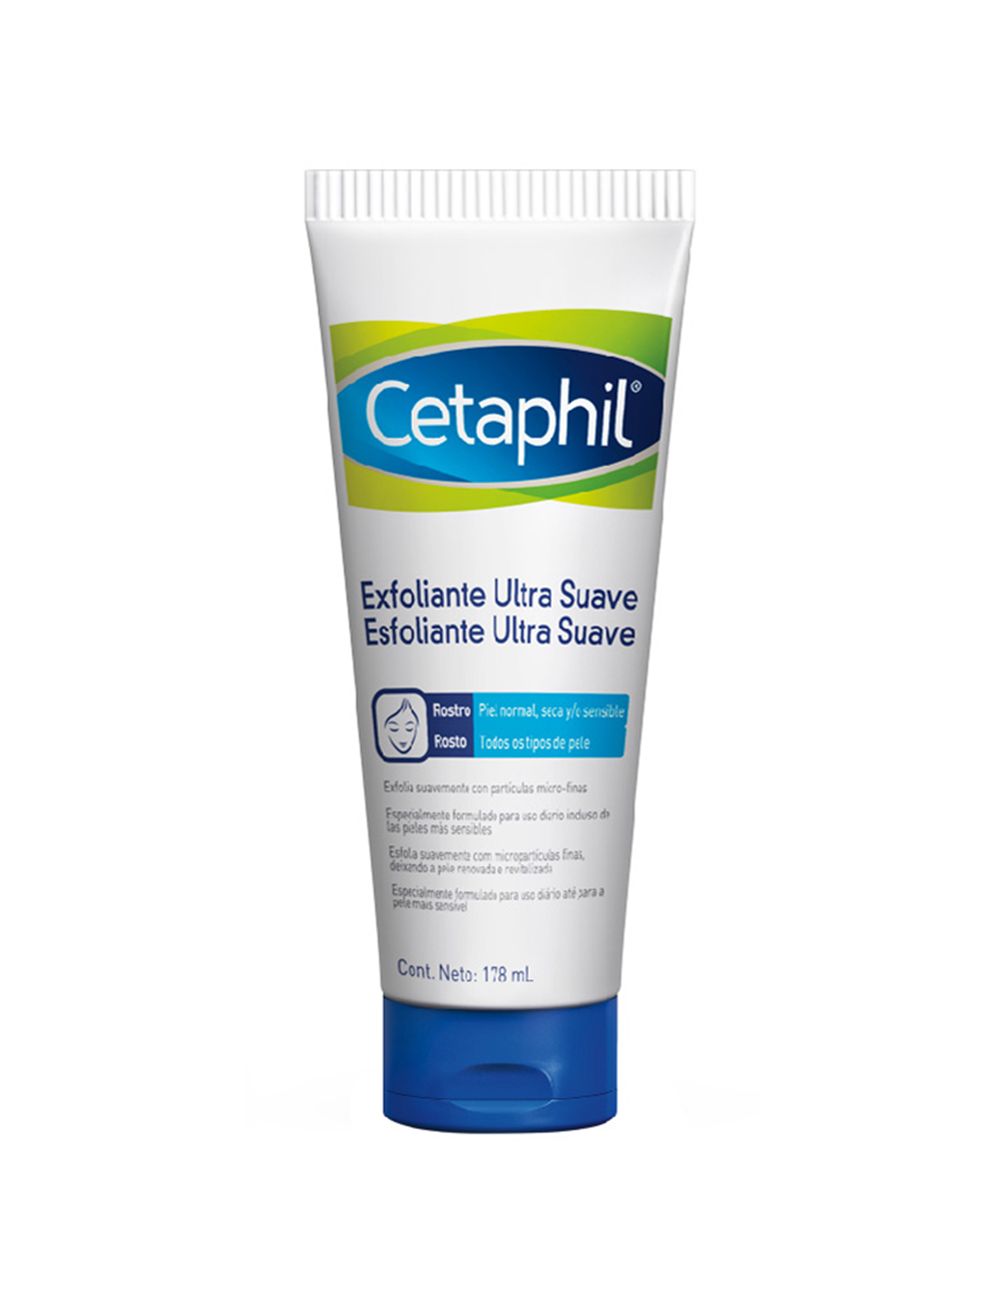 Cetaphil Exfoliante Ultra Suave Con 178 mL